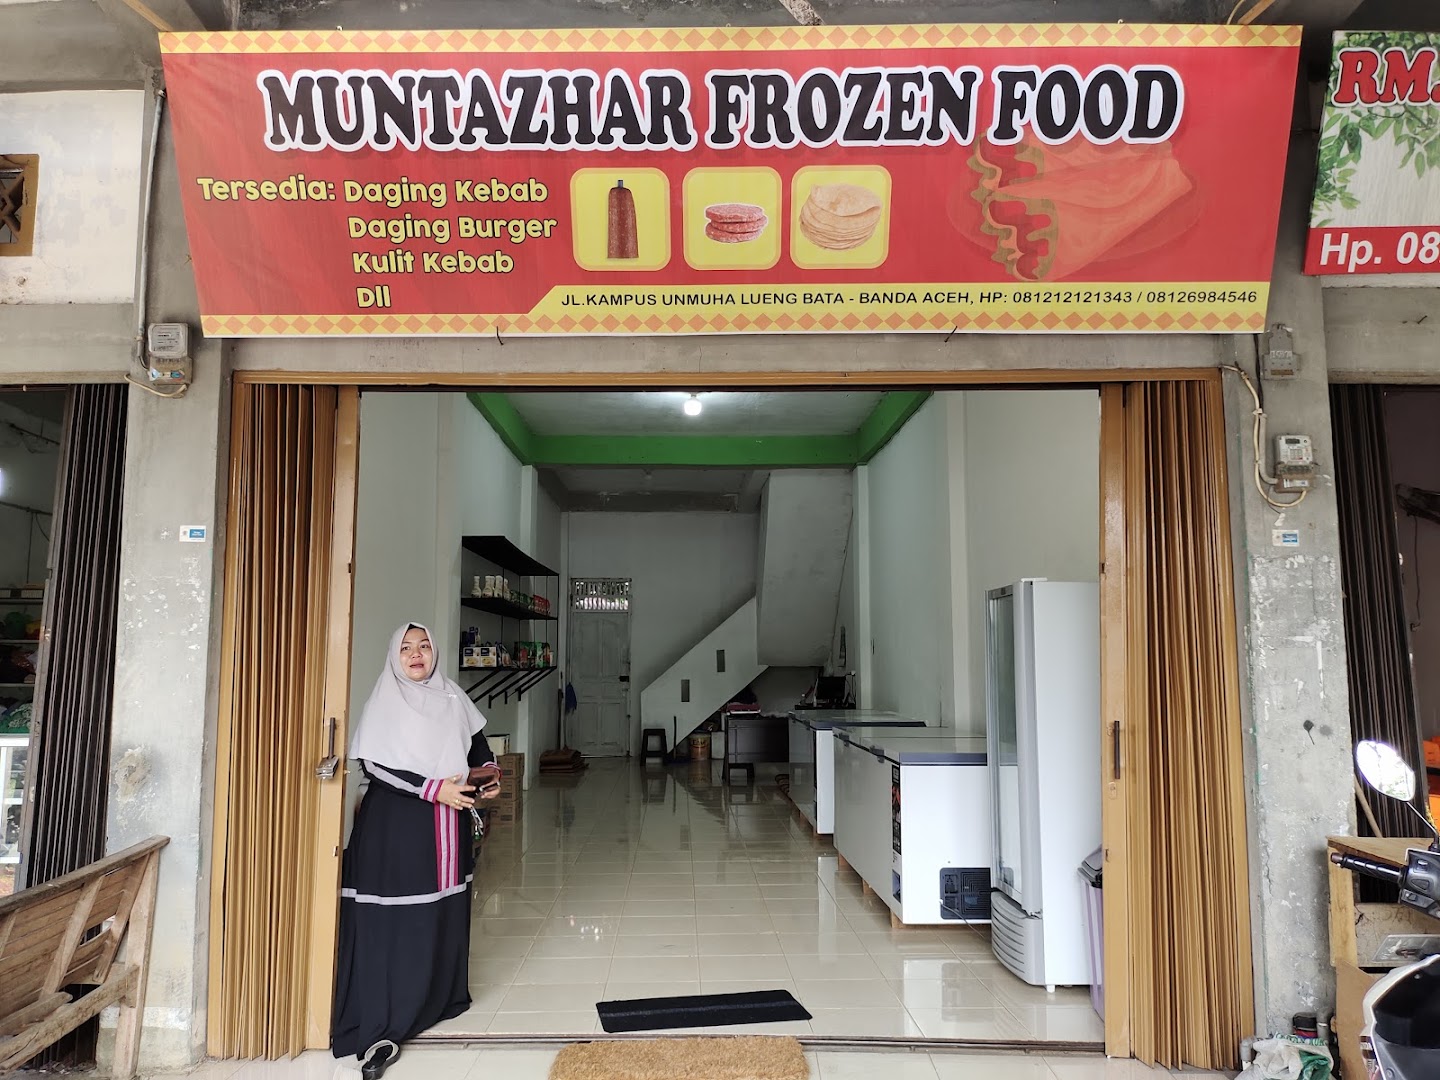 Gambar Muntazhar Frozen Food